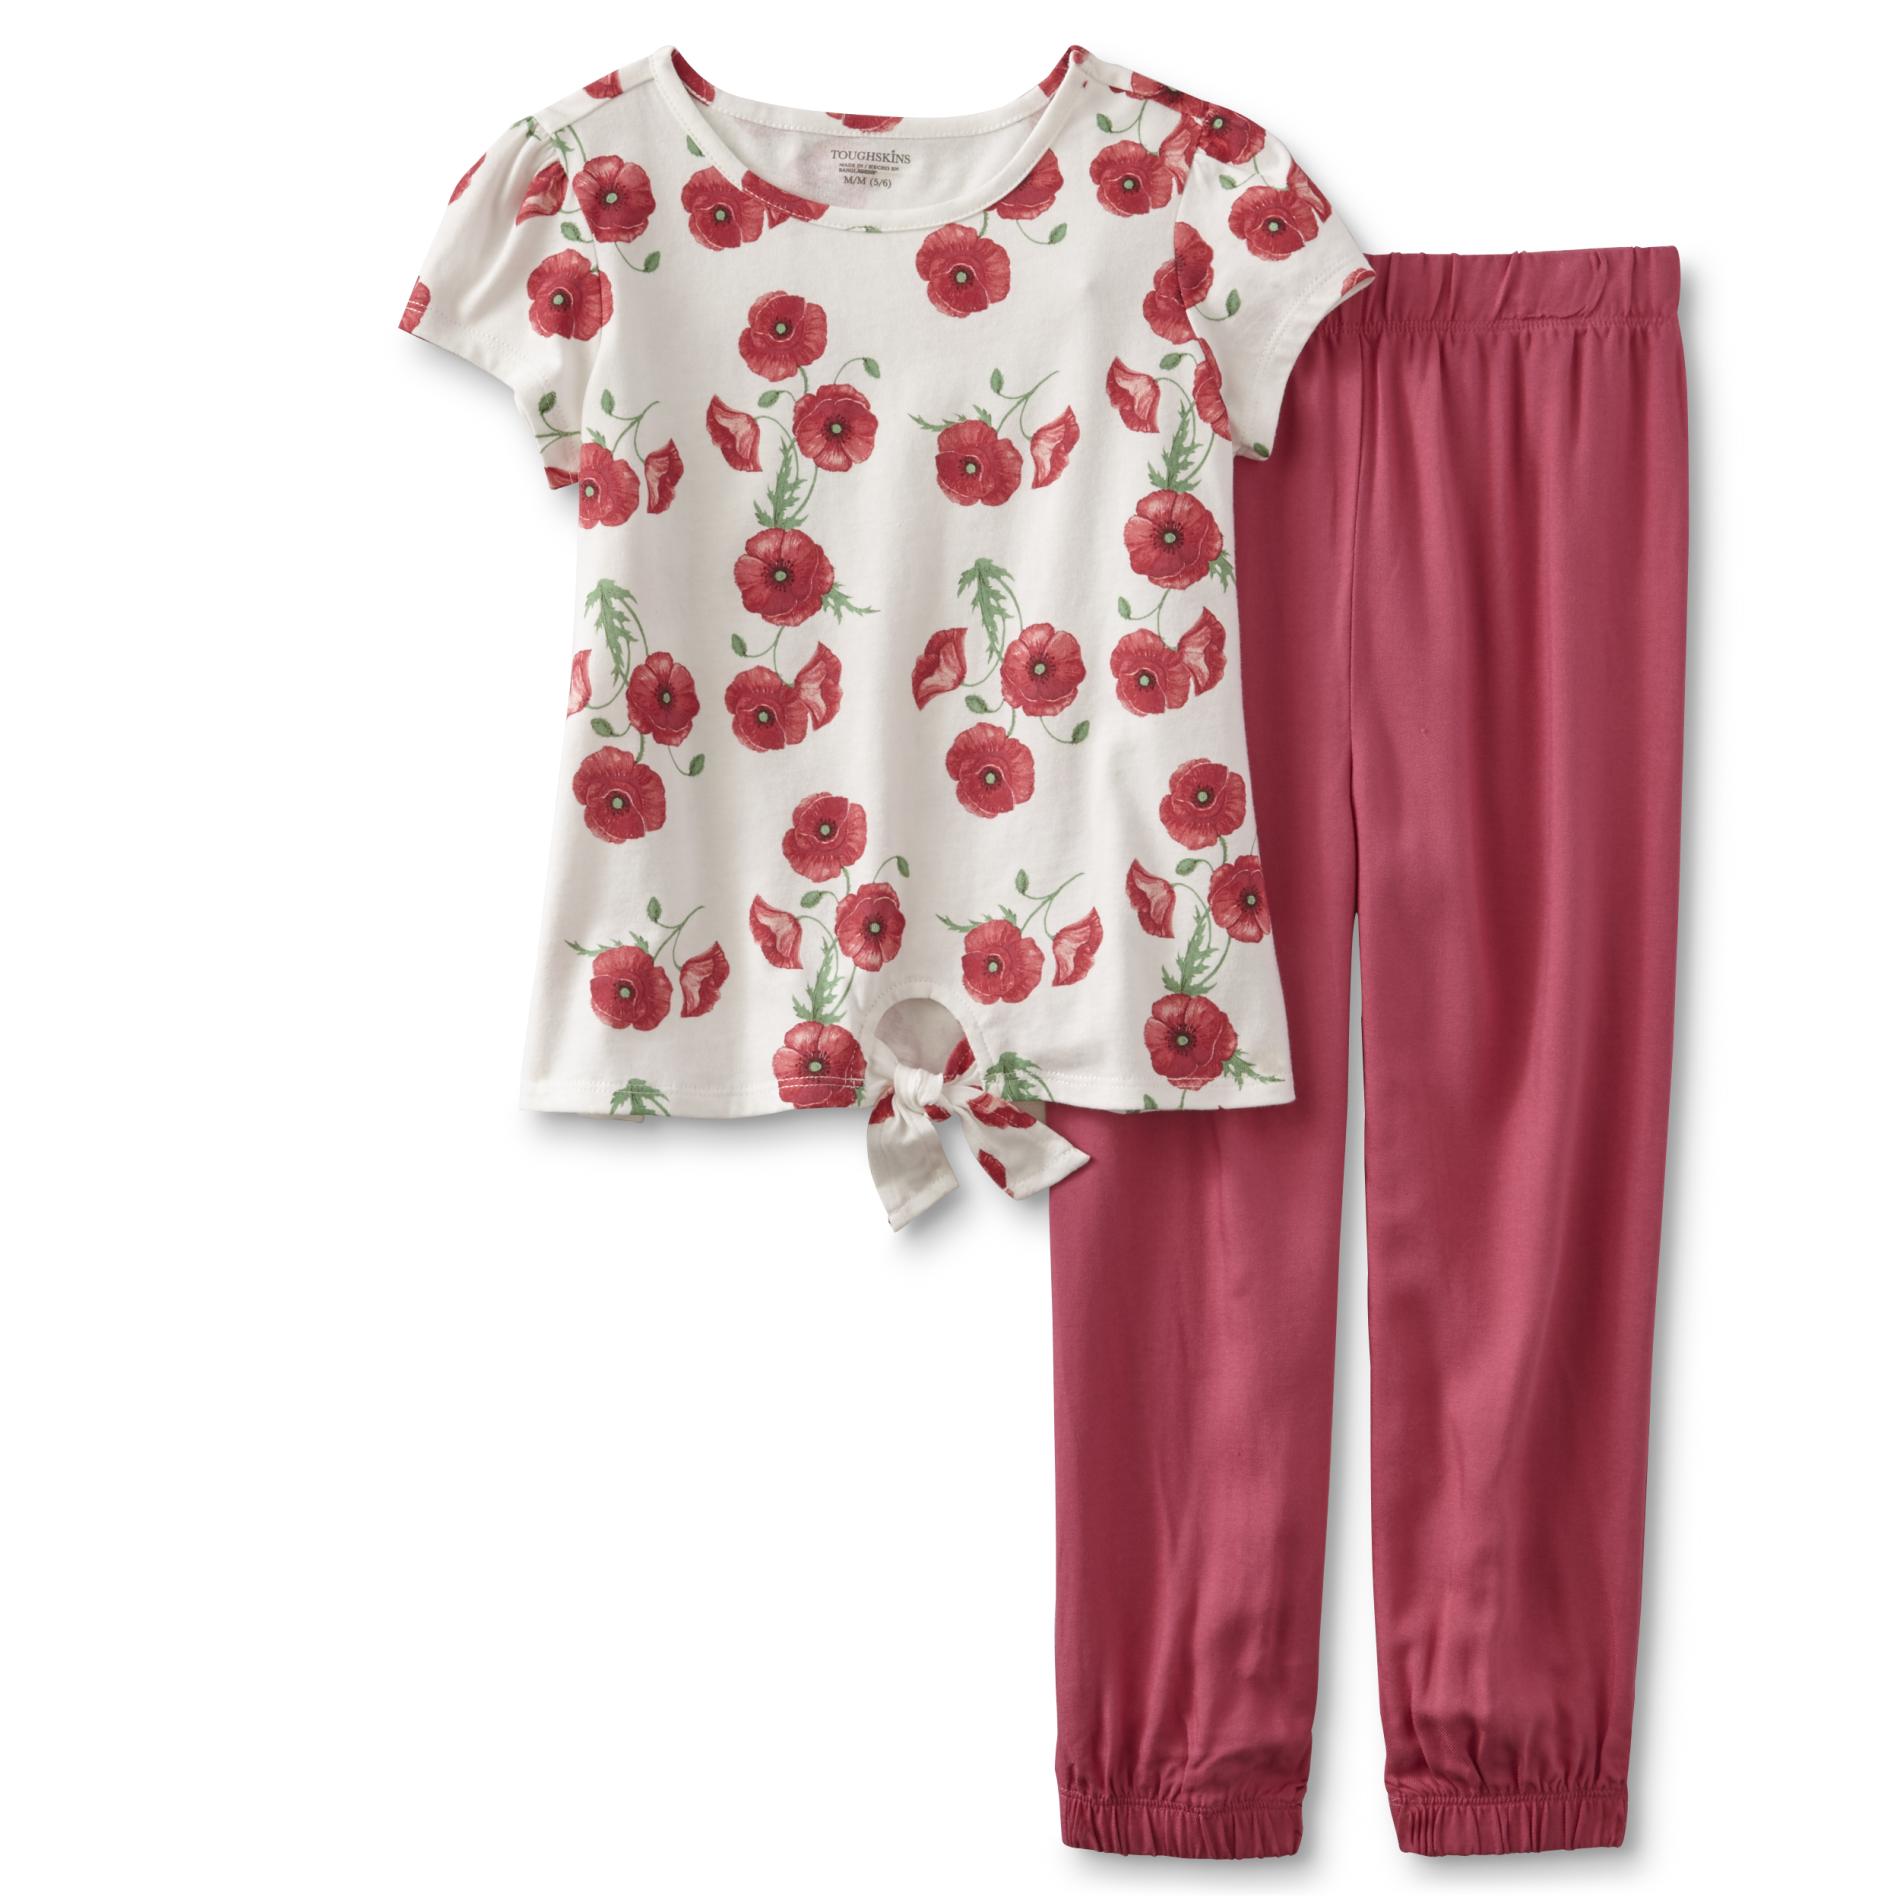 Toughskins Infant & Toddler Girls' T-Shirt & Pants - Floral